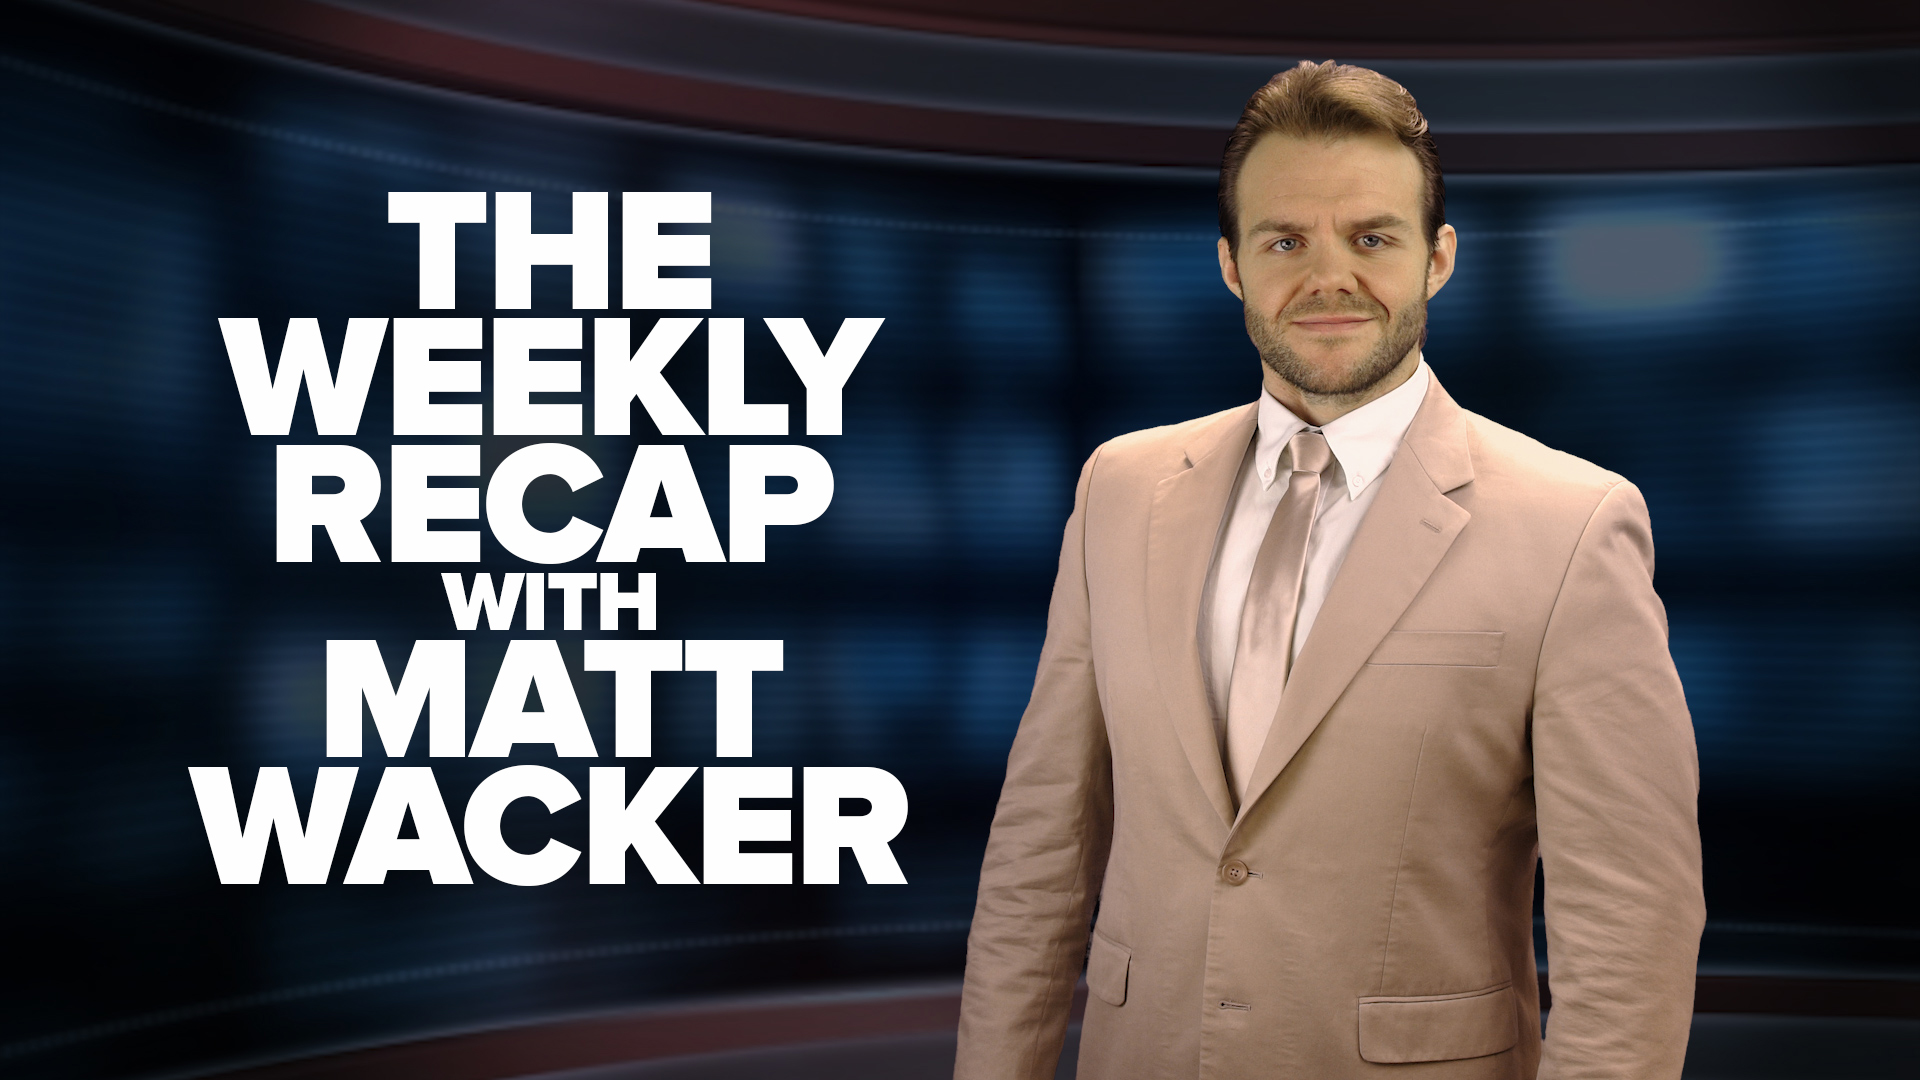 image says the weekly recap with Matt Wacker and Matt Wacker is pictured